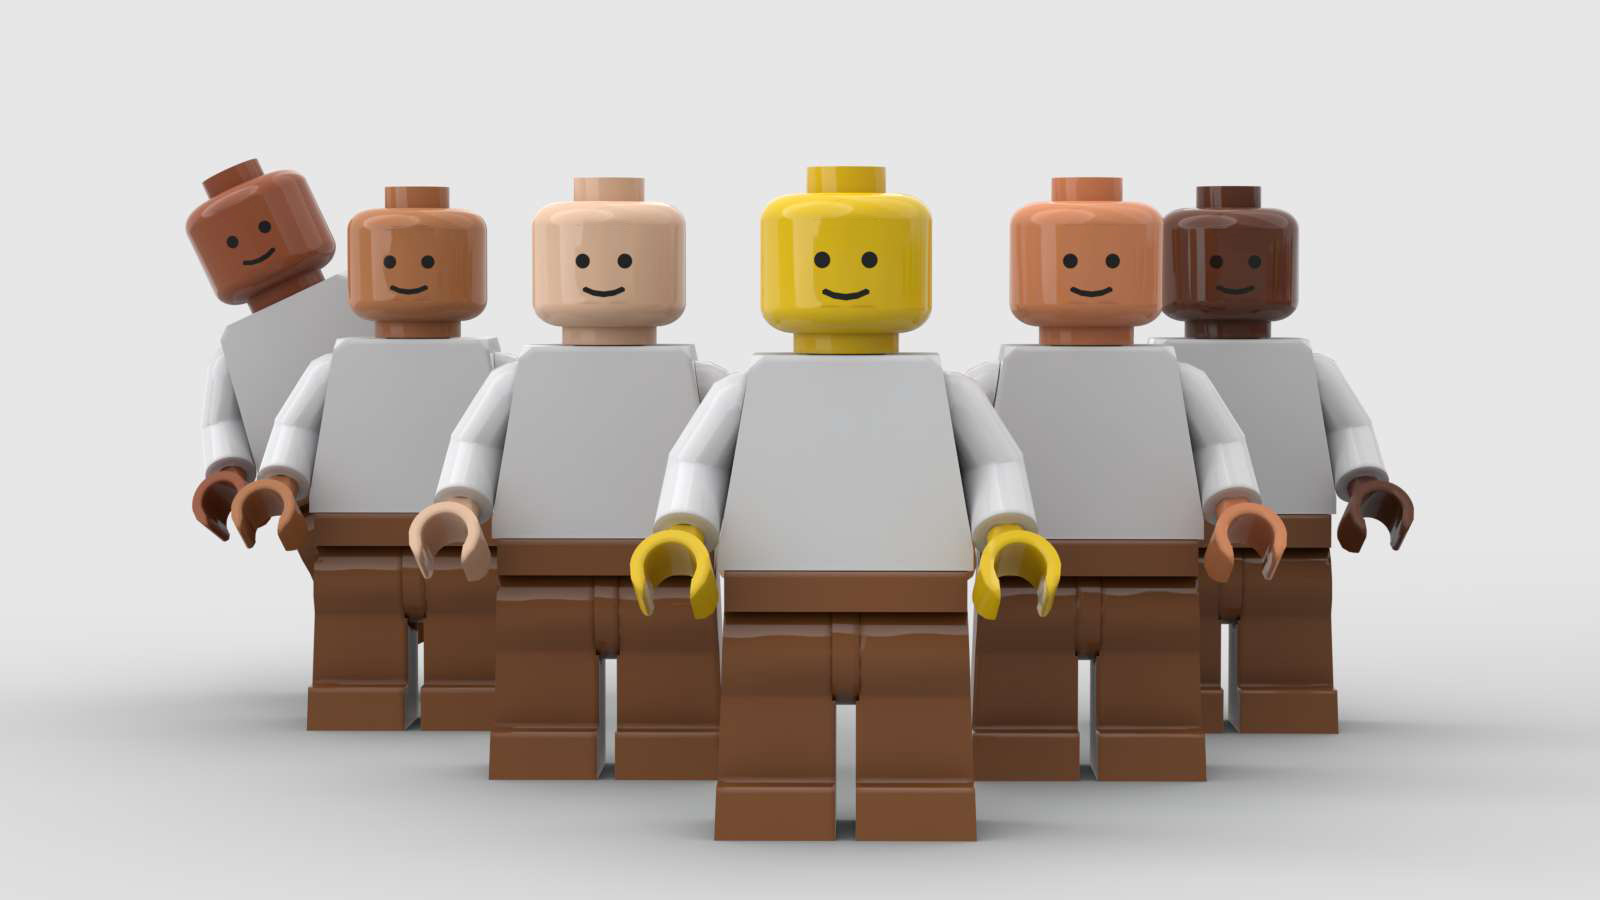 20 yellow hands Lego figurines